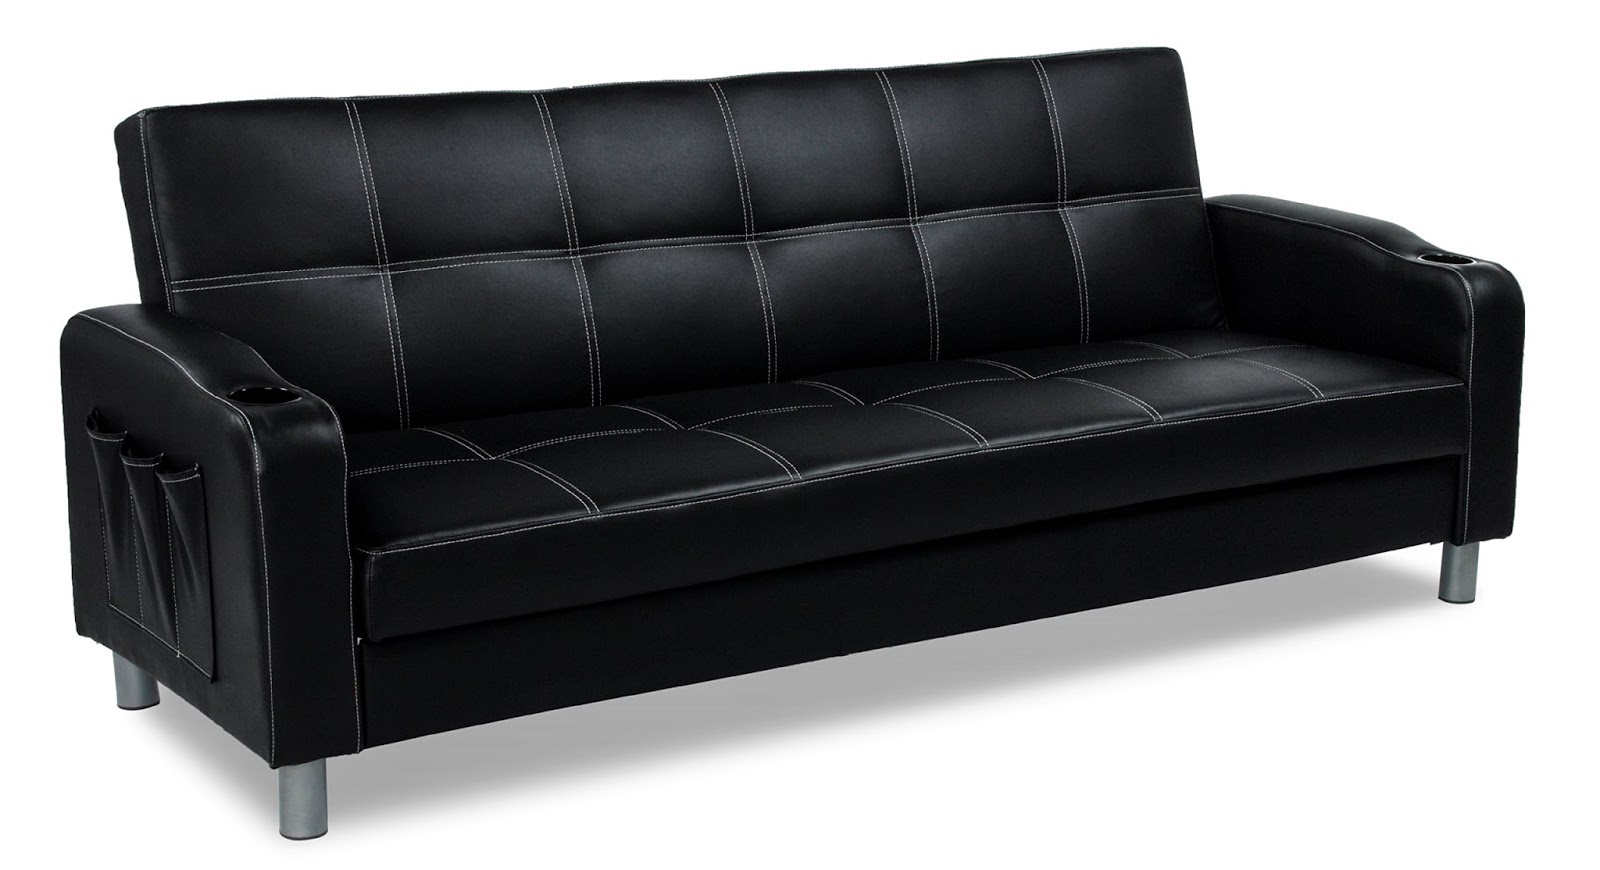 Serta Astro Convertible Sofa